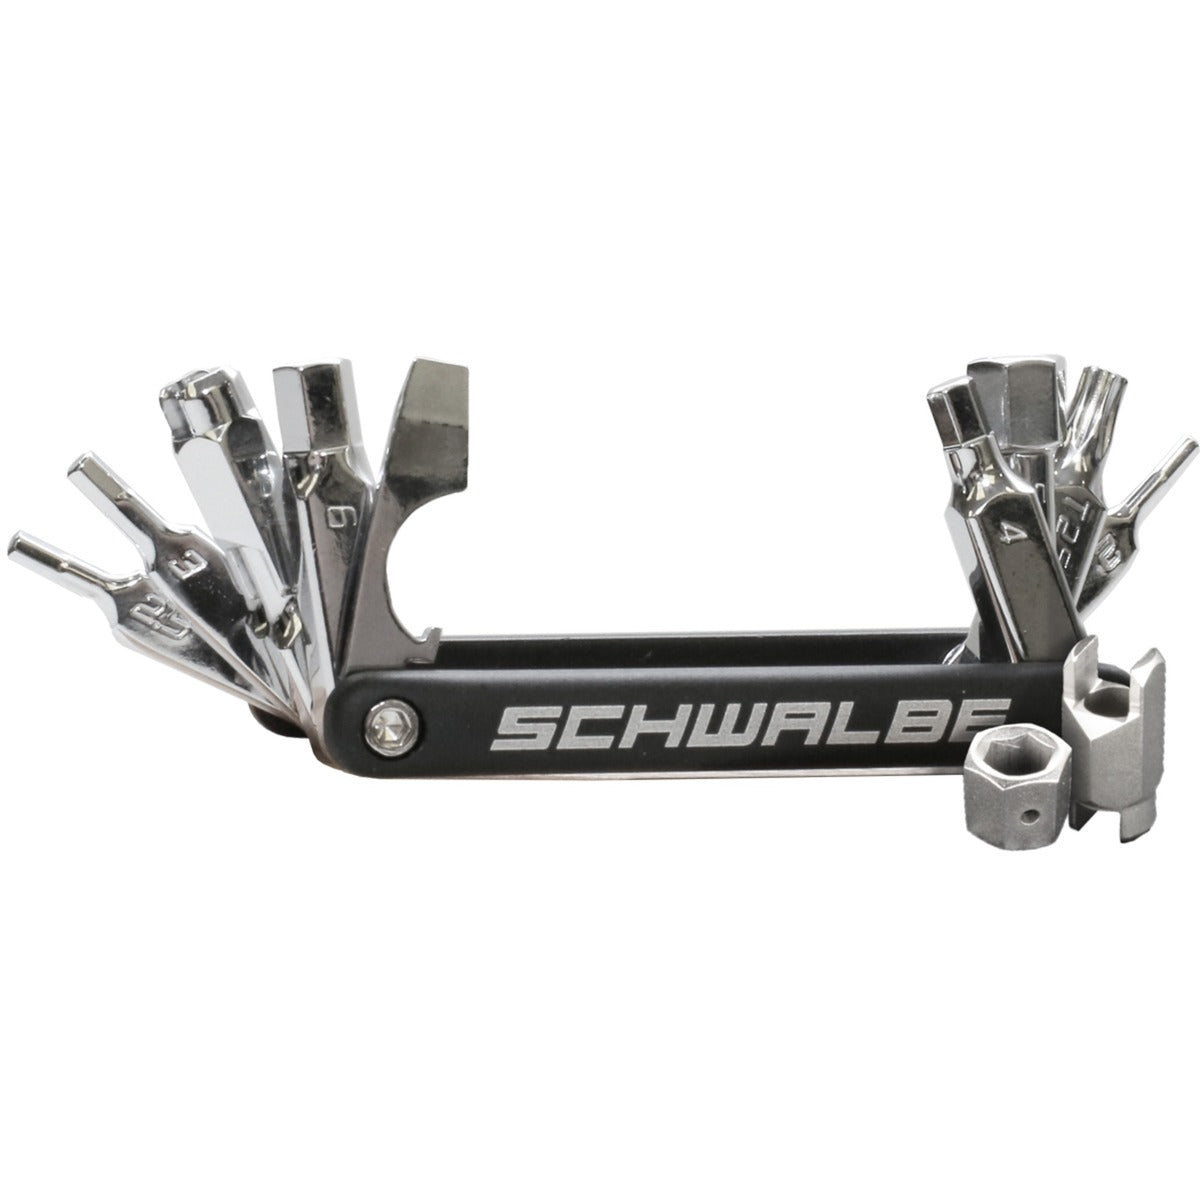 Multi outils et valve Schwalbe